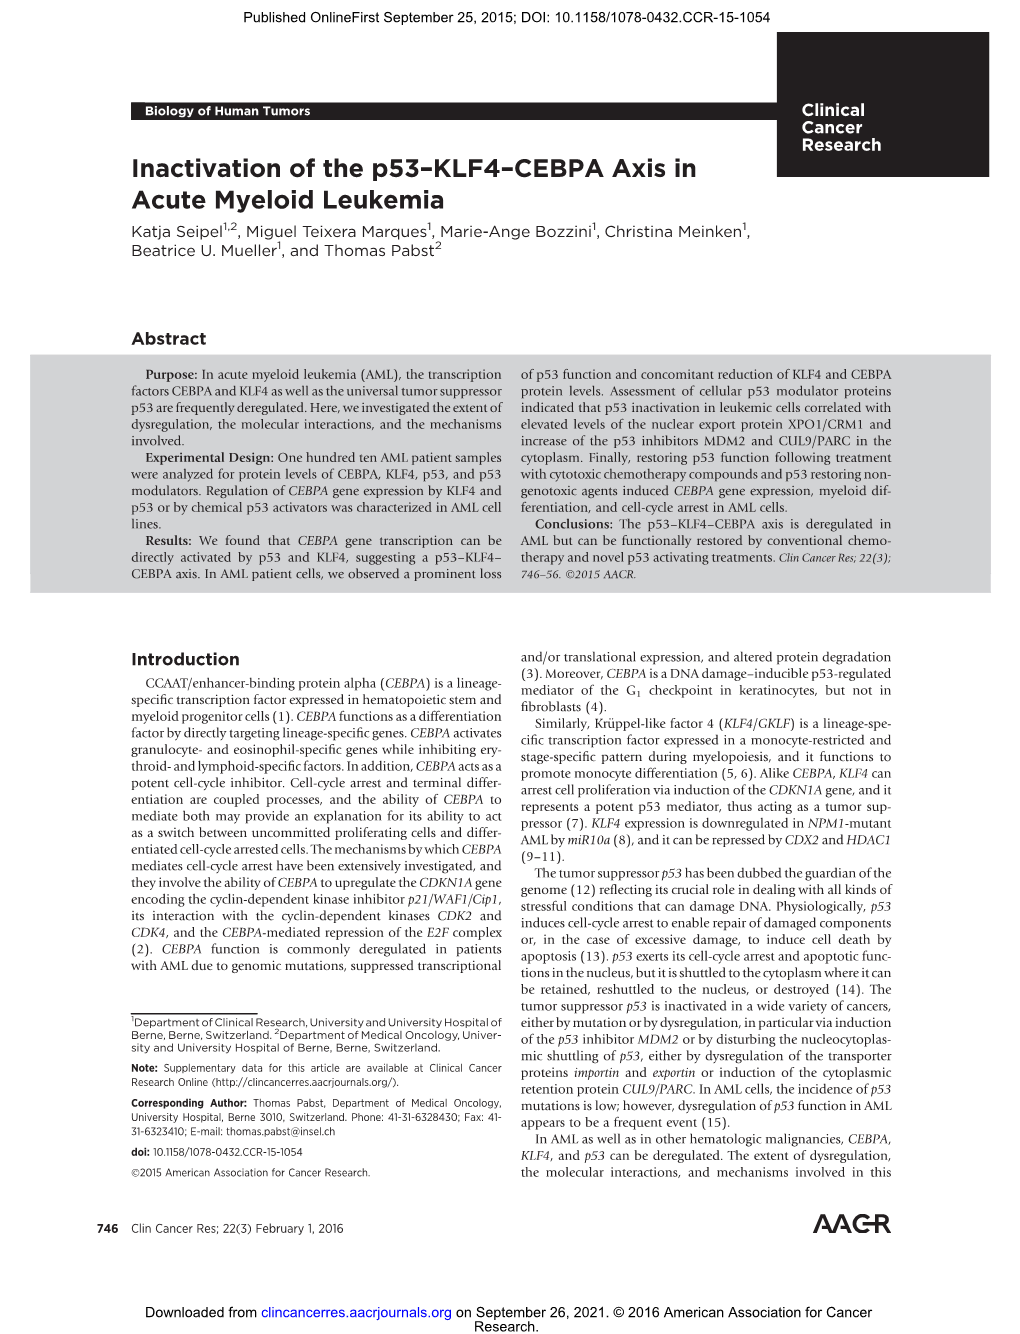 Inactivation of the P53–KLF4–CEBPA Axis in Acute Myeloid Leukemia Katja Seipel1,2, Miguel Teixera Marques1, Marie-Ange Bozzini1, Christina Meinken1, Beatrice U